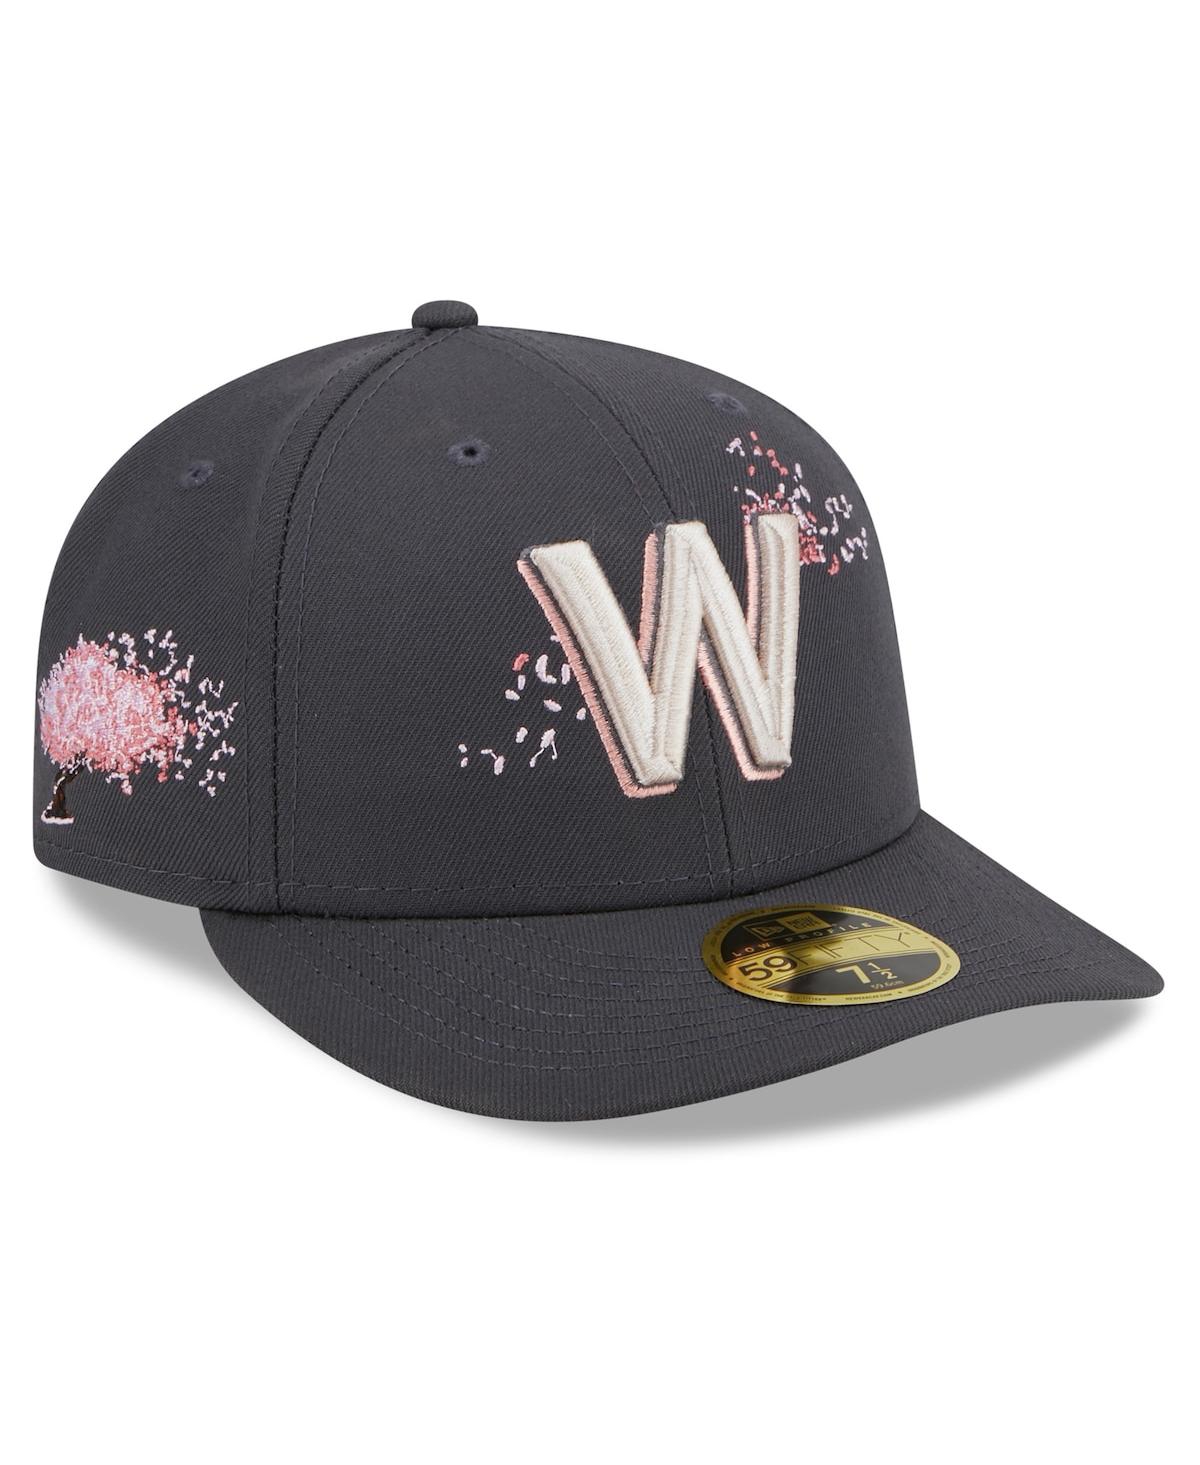 New Era Washington Nationals Low Profile Alternate 59FIFTYFitted Hat/Cap